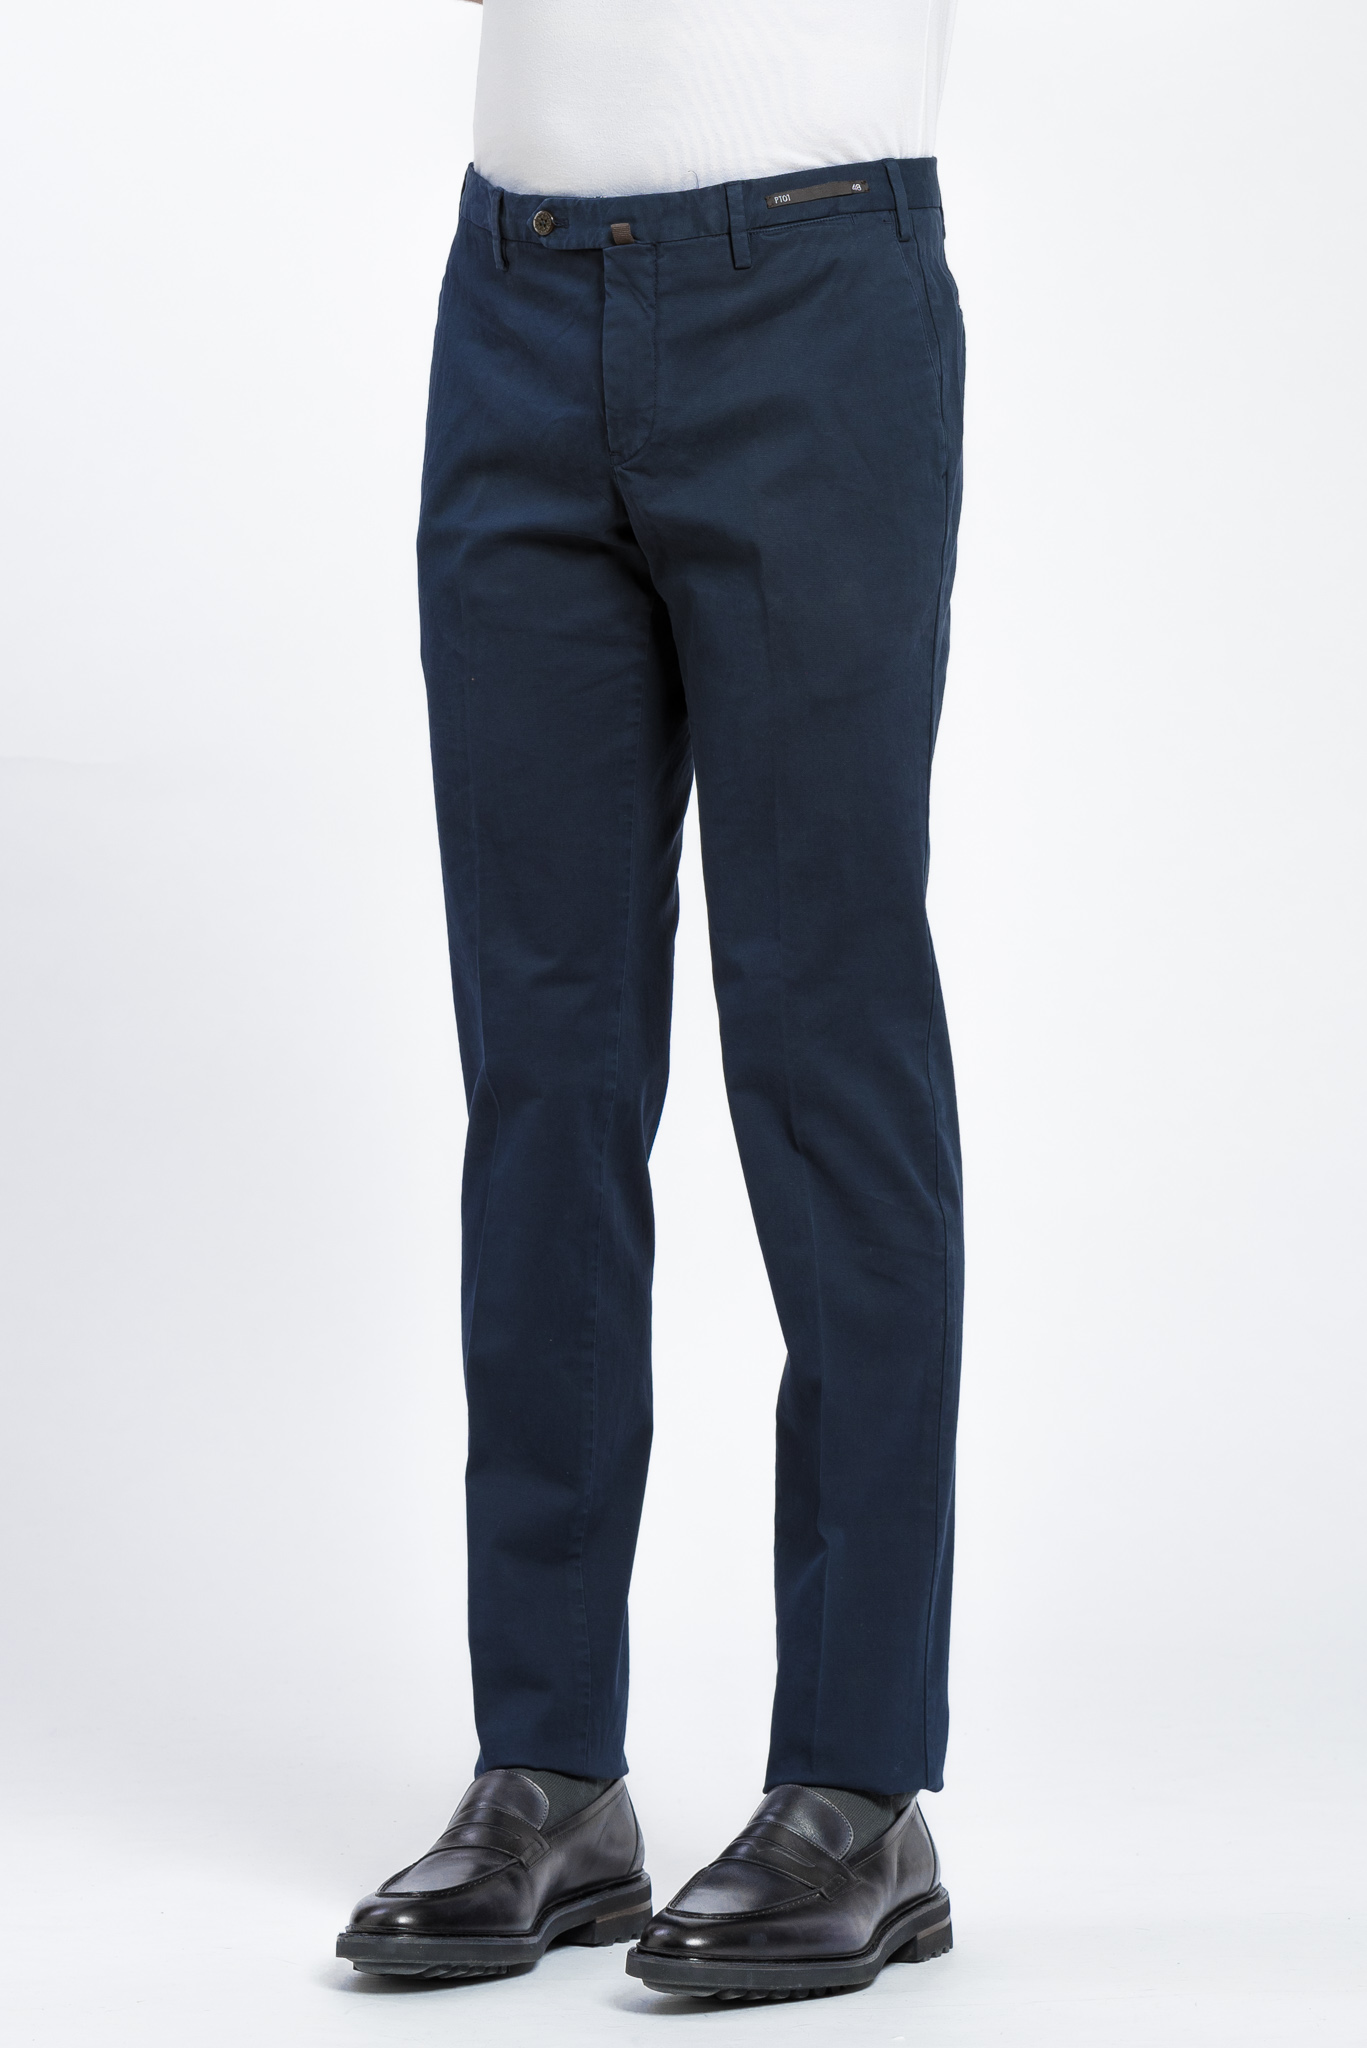 270$ PT01 NORTHERN LIGHTS Blue Navy Trousers Pants Winter Cotton Slim ...